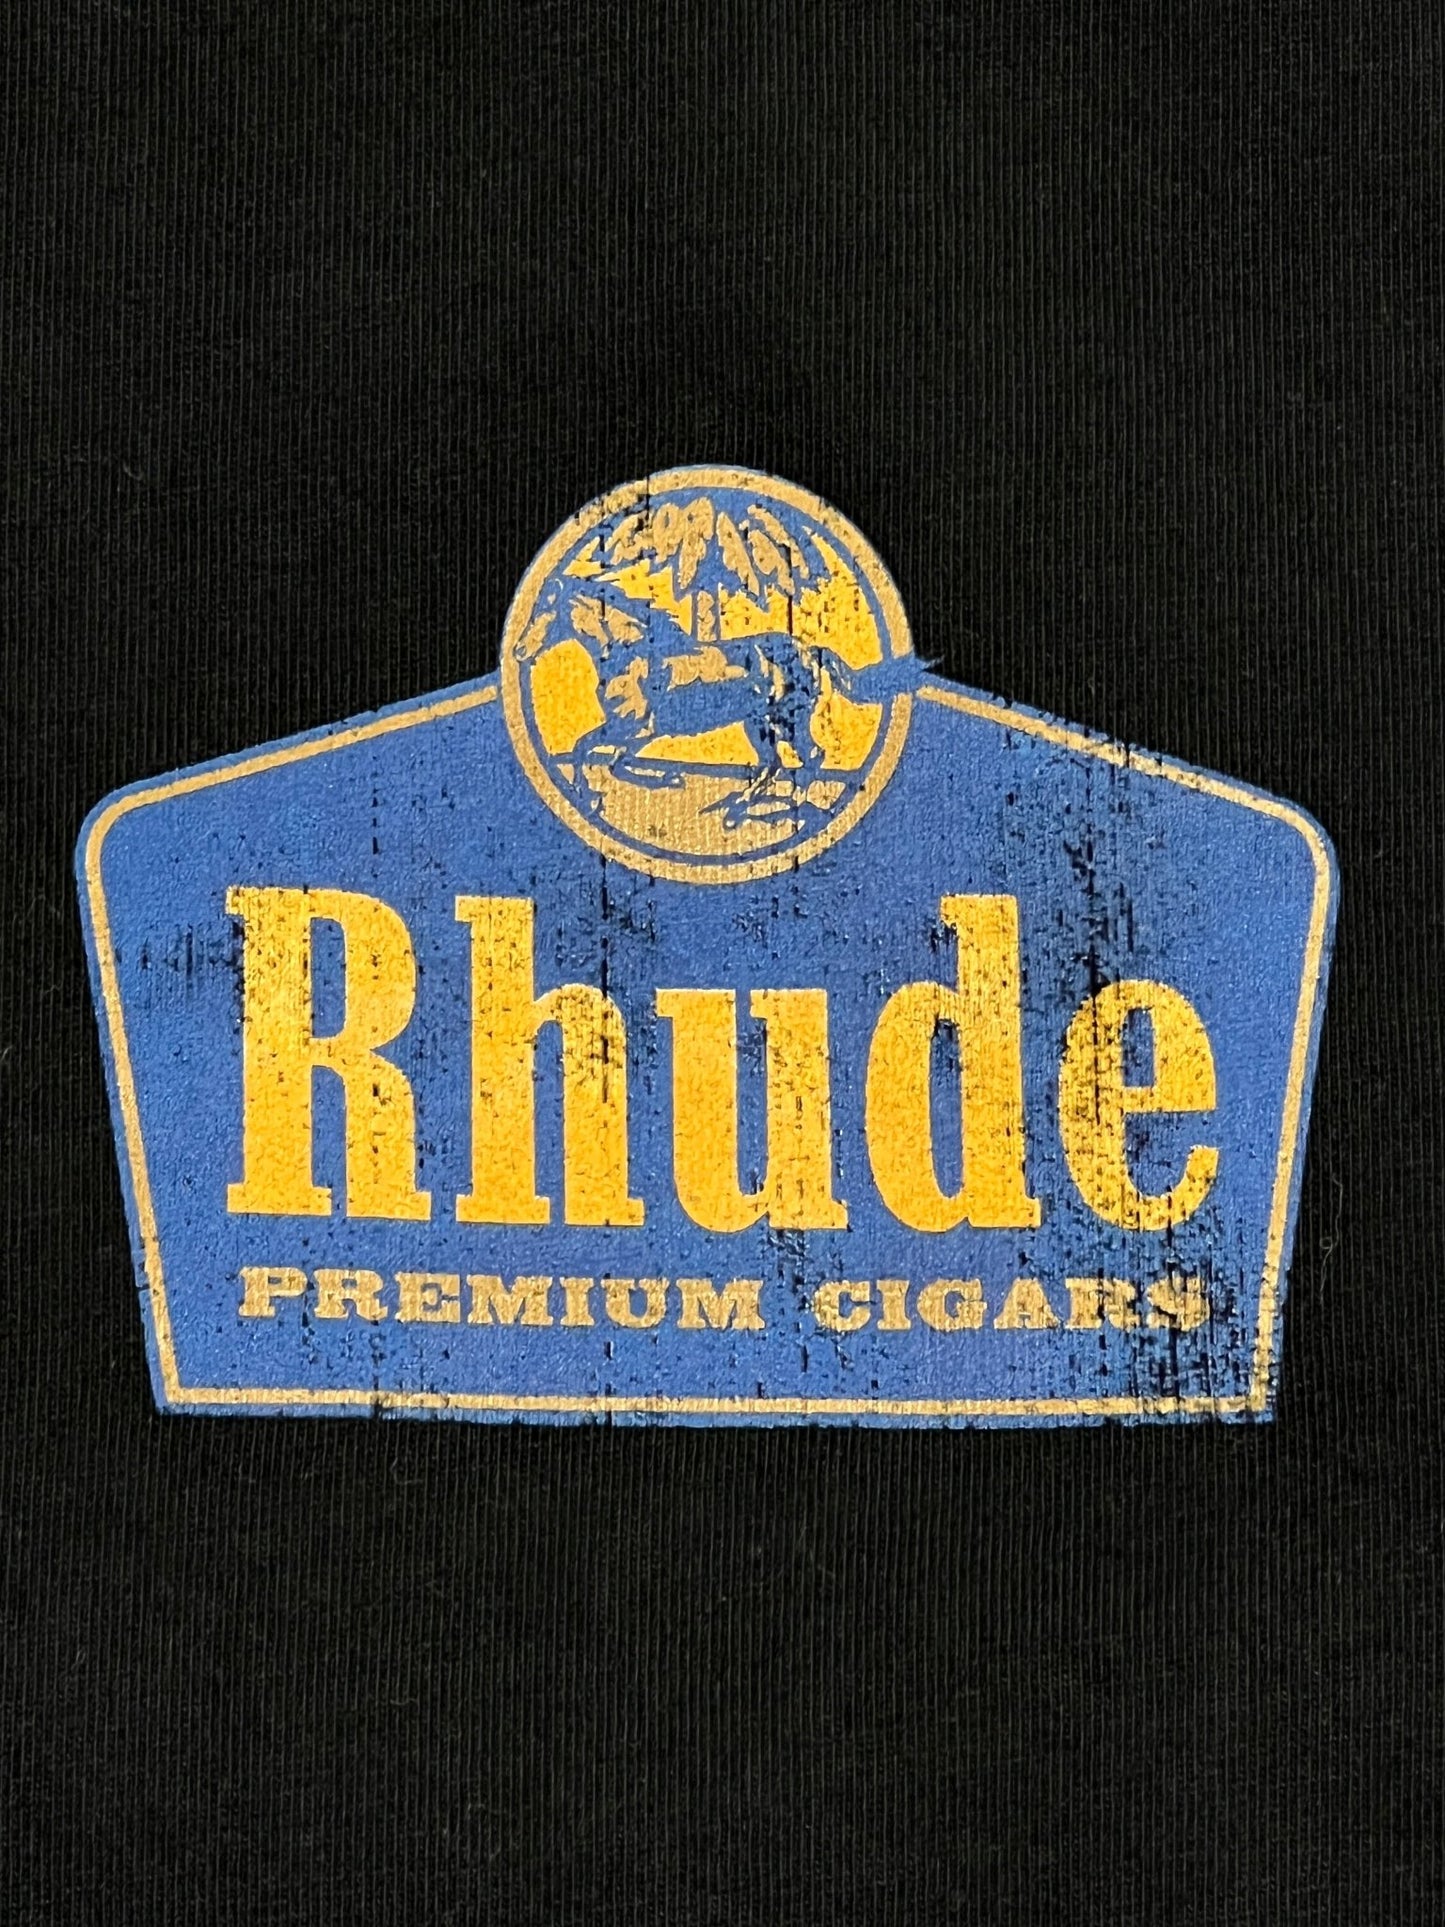 RHUDE Grand Cru Cigars logo on a cotton RHUDE tee shirt in vintage fit.